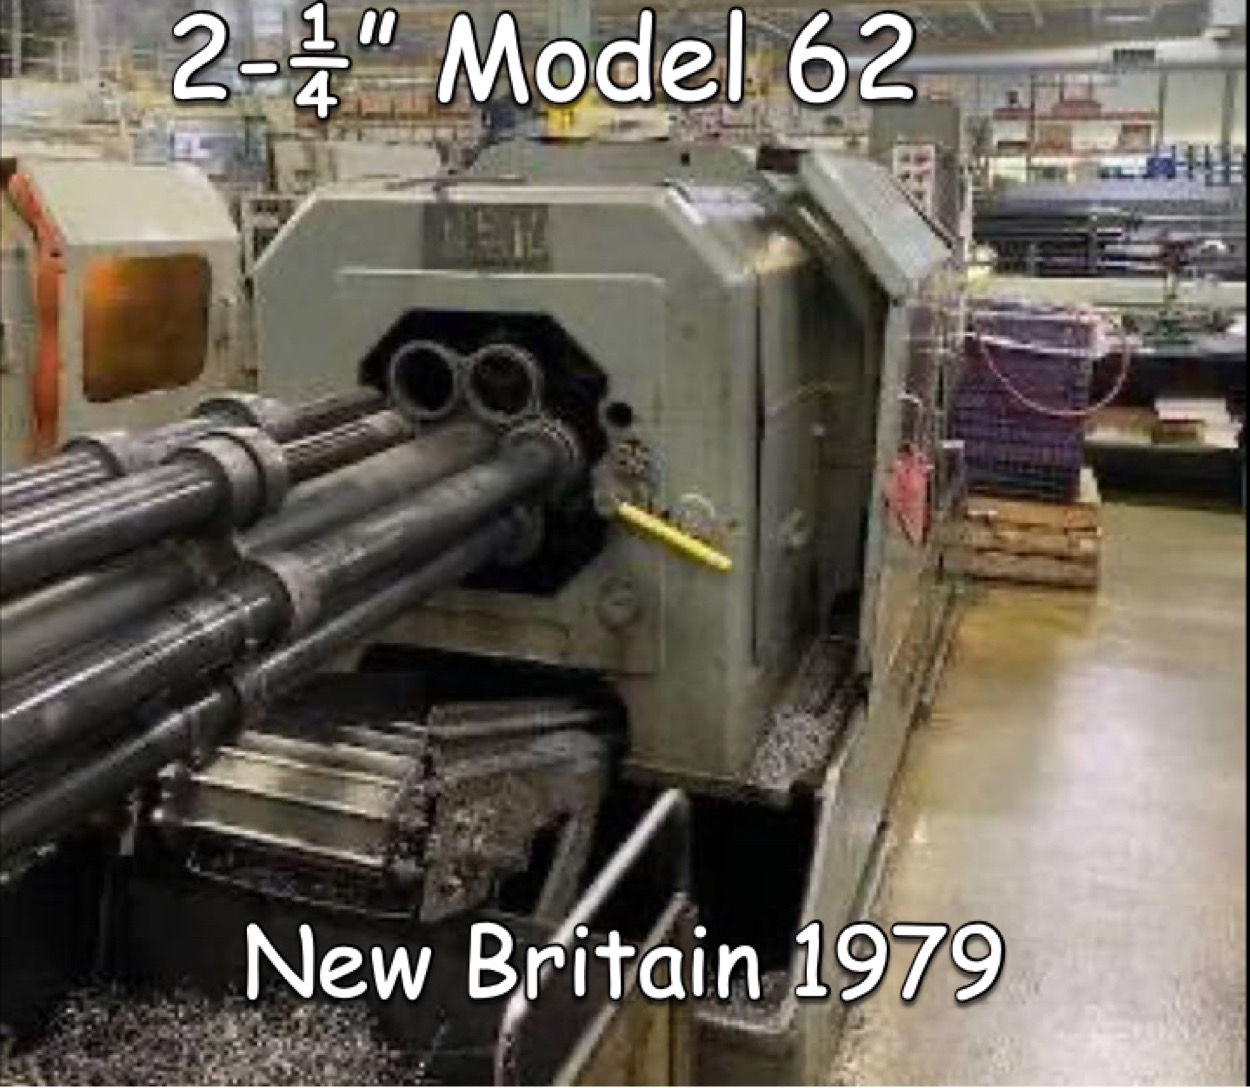 New Britain Model 62 1979